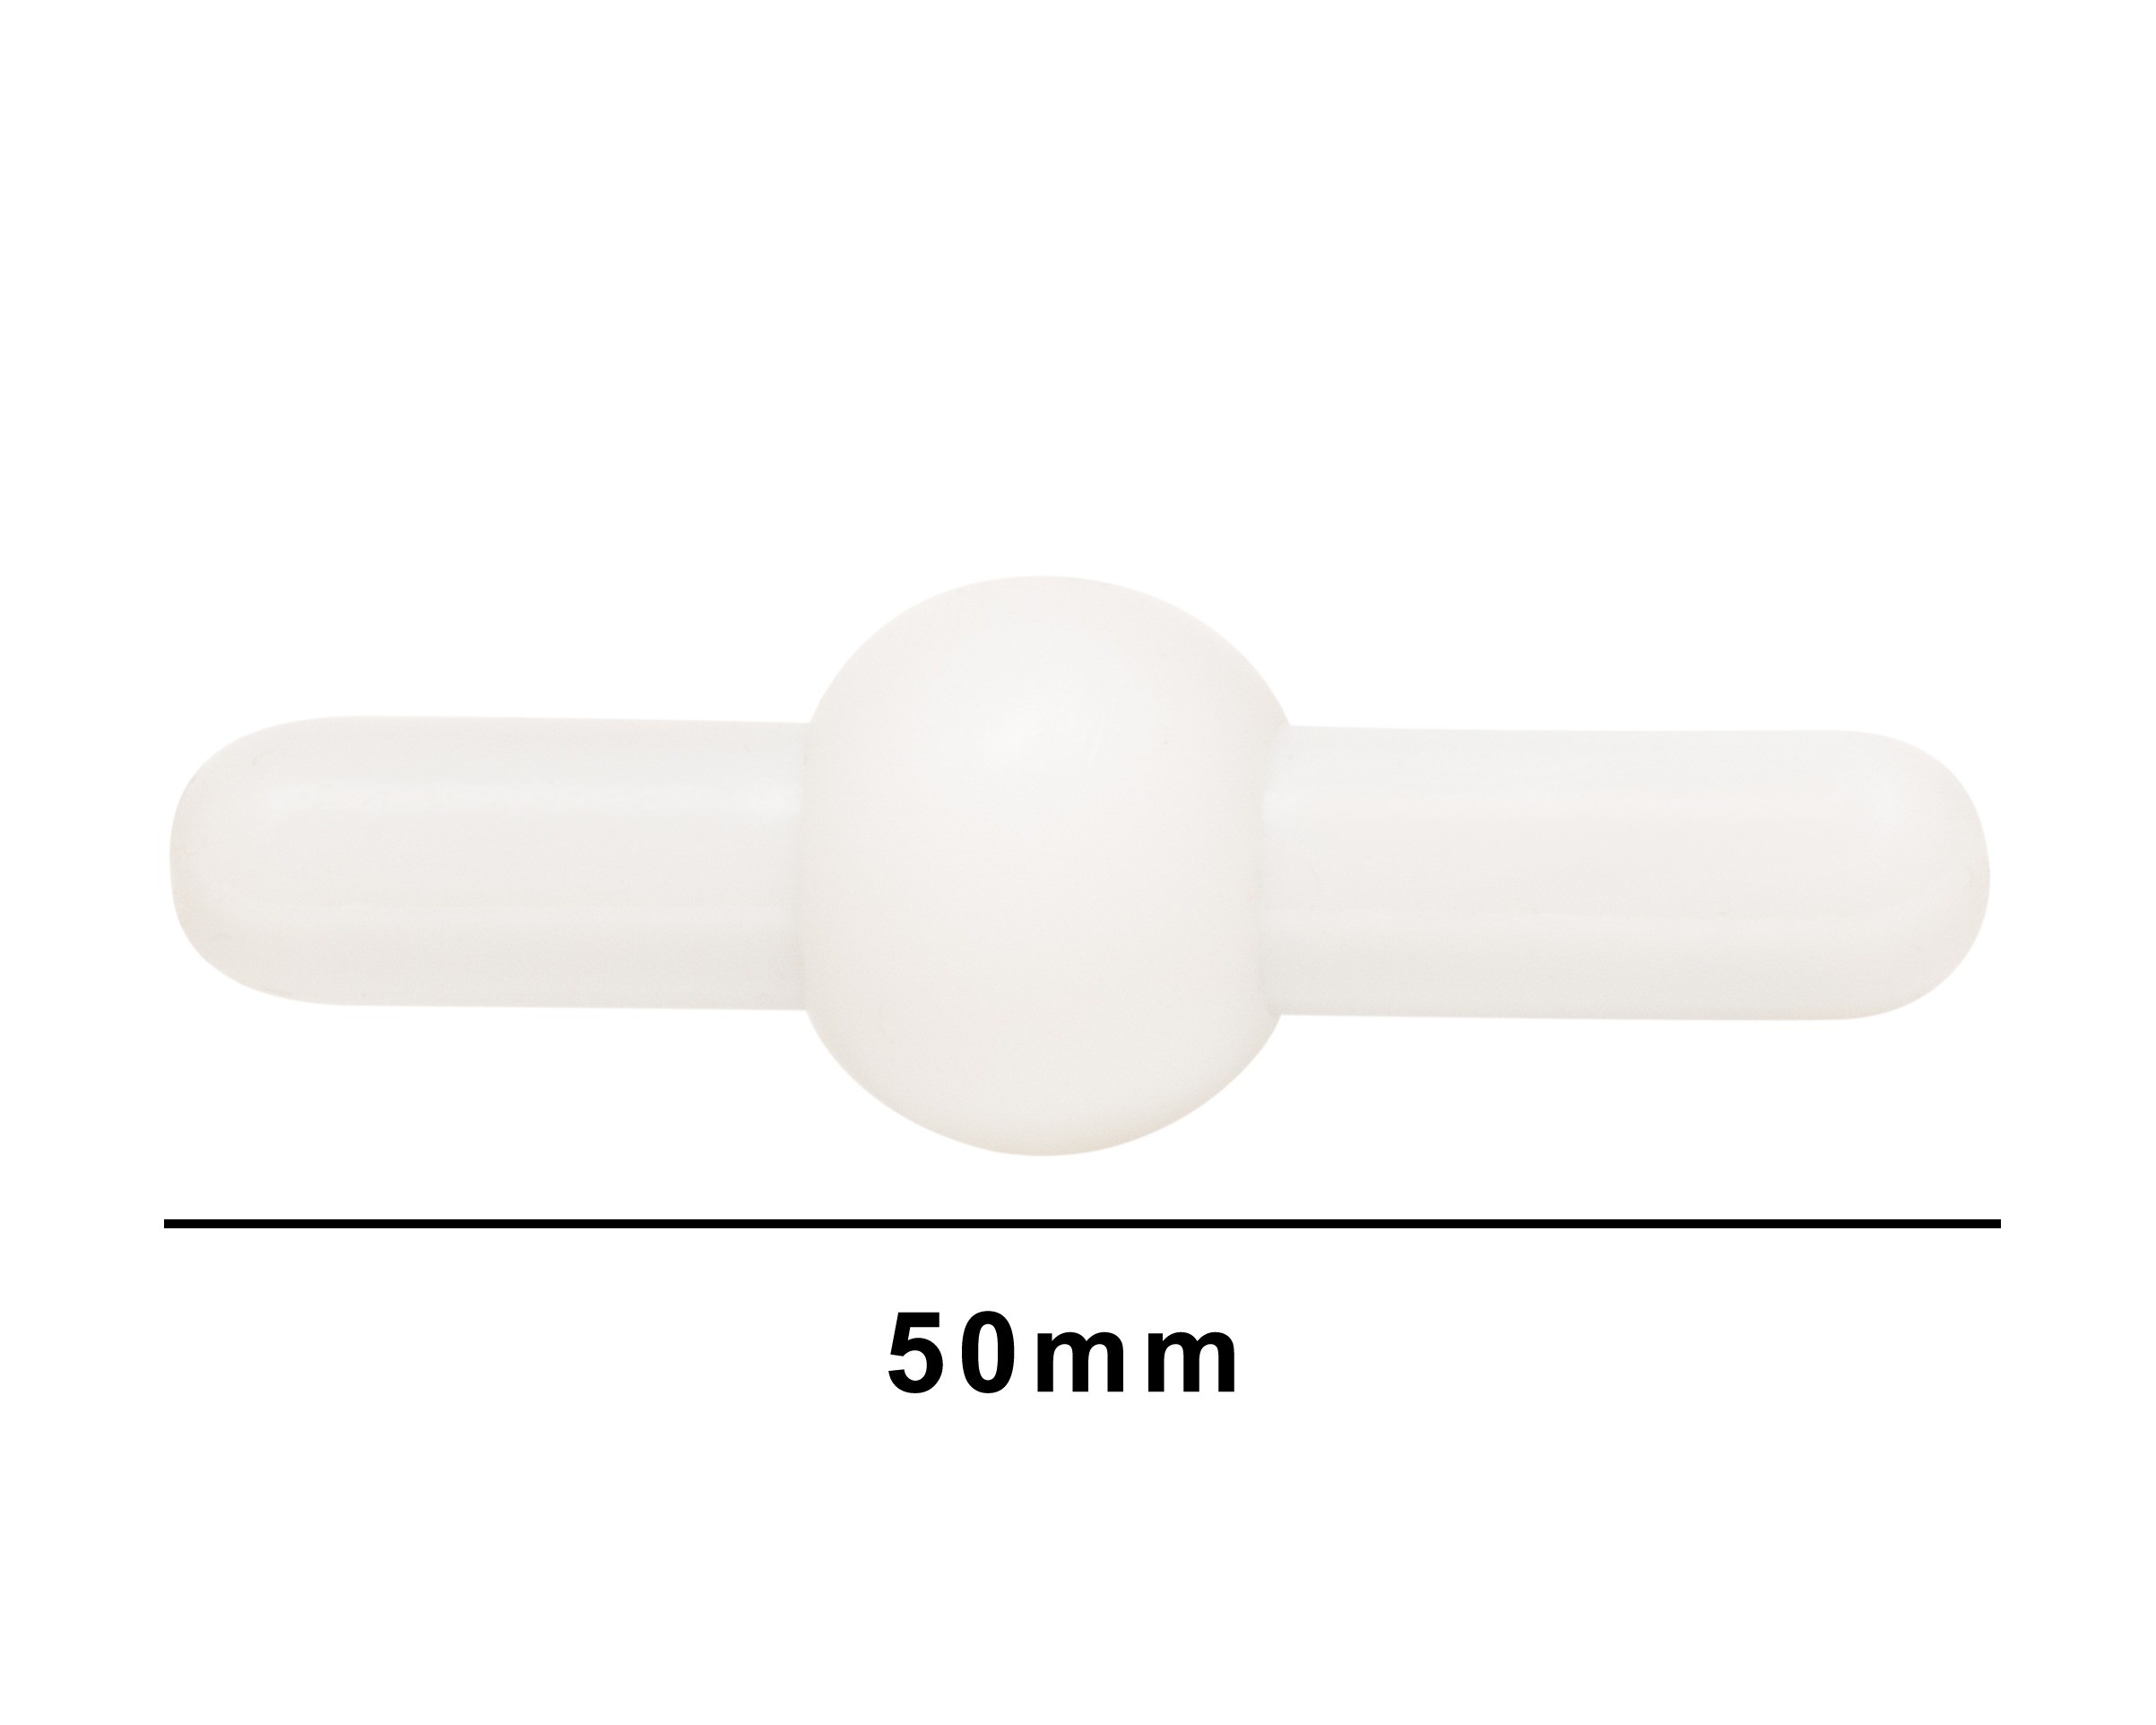 SP Bel-Art Saturn Spinbar Teflon Magnetic Stirring Bar; 50mm, White